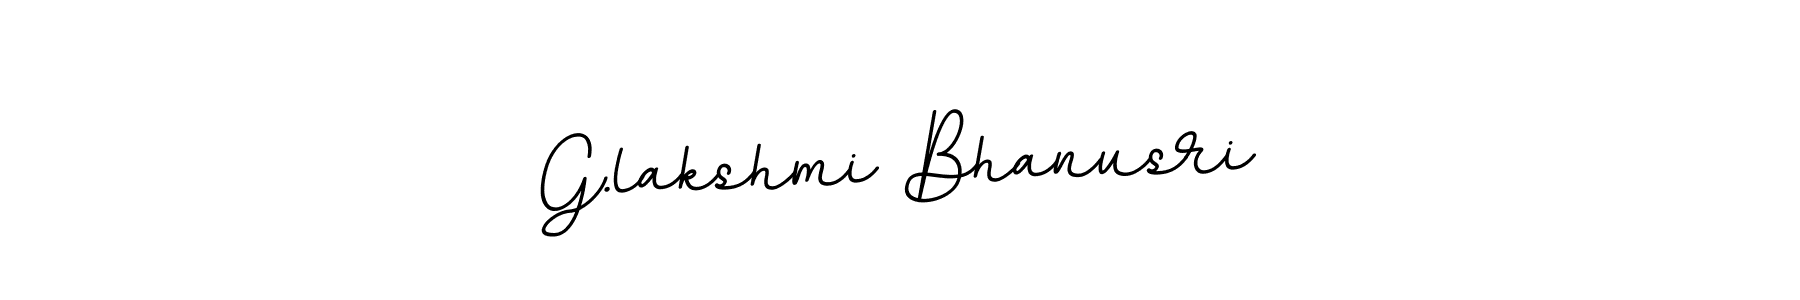 How to Draw G.lakshmi Bhanusri signature style? BallpointsItalic-DORy9 is a latest design signature styles for name G.lakshmi Bhanusri. G.lakshmi Bhanusri signature style 11 images and pictures png